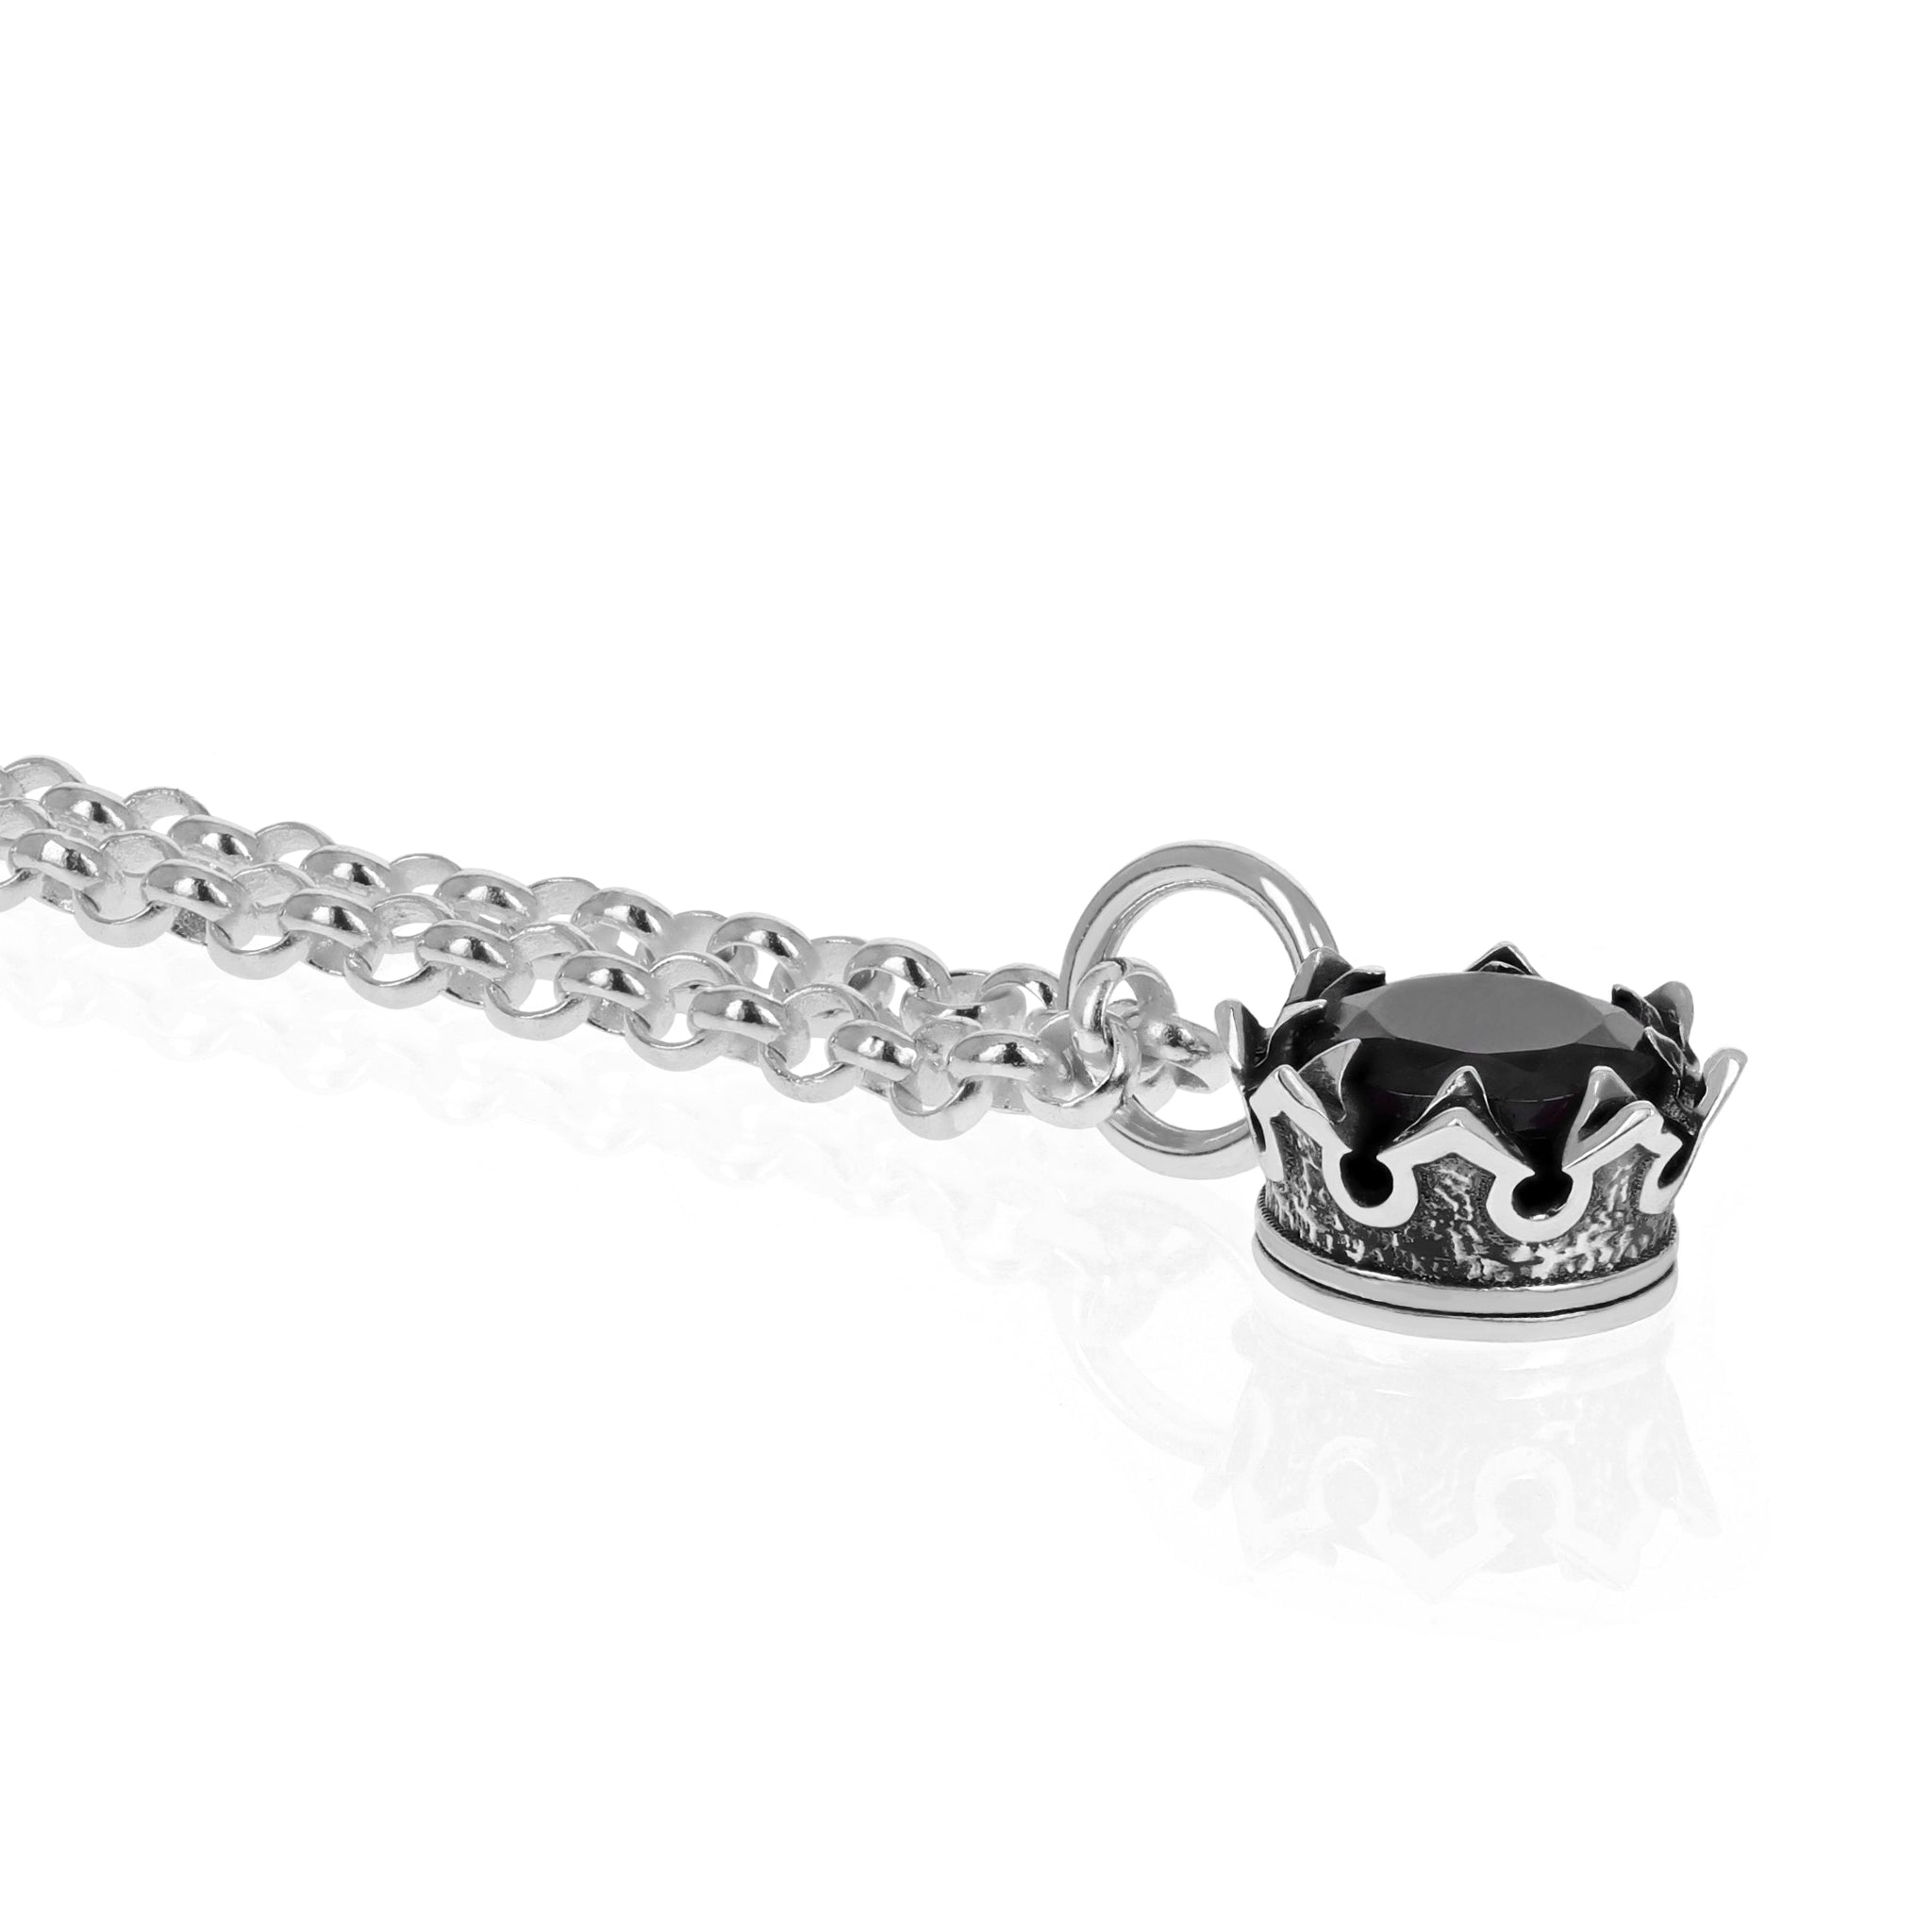 Crowned Garnet Pendant w/ Micro Rolo Chain